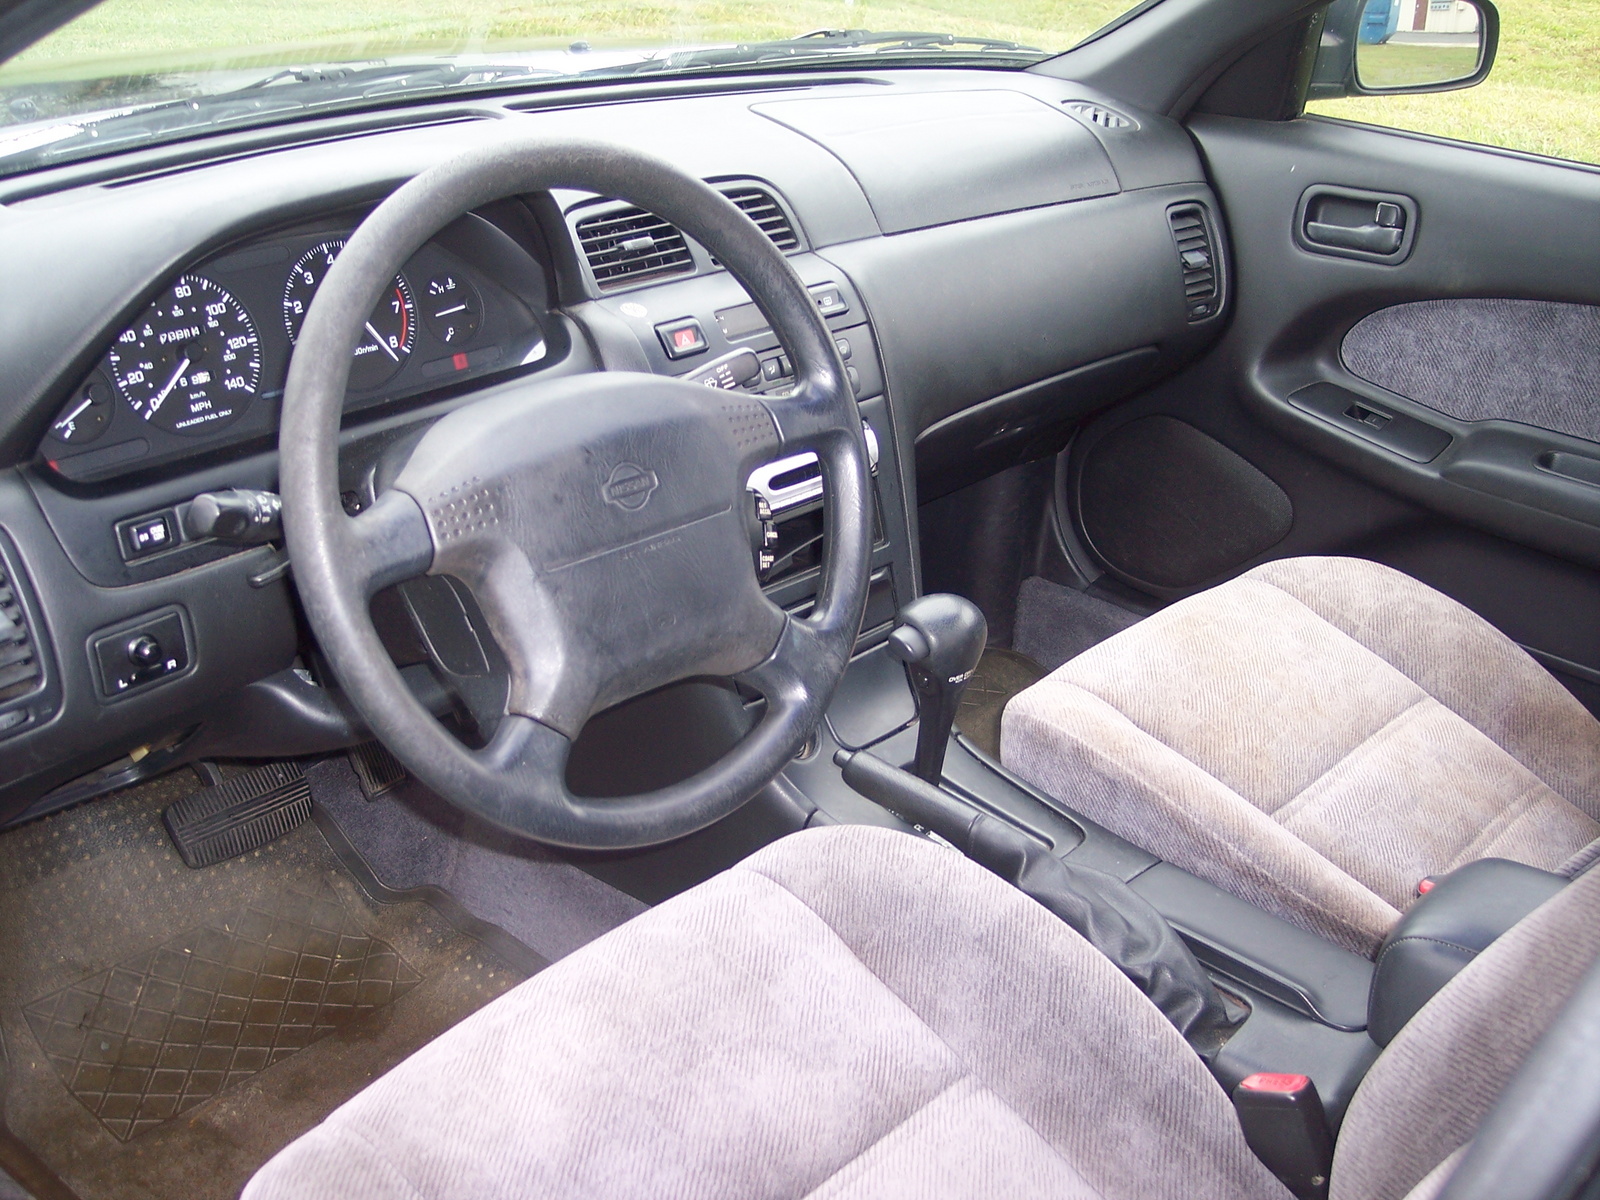 1997 Nissan maxima interior #9